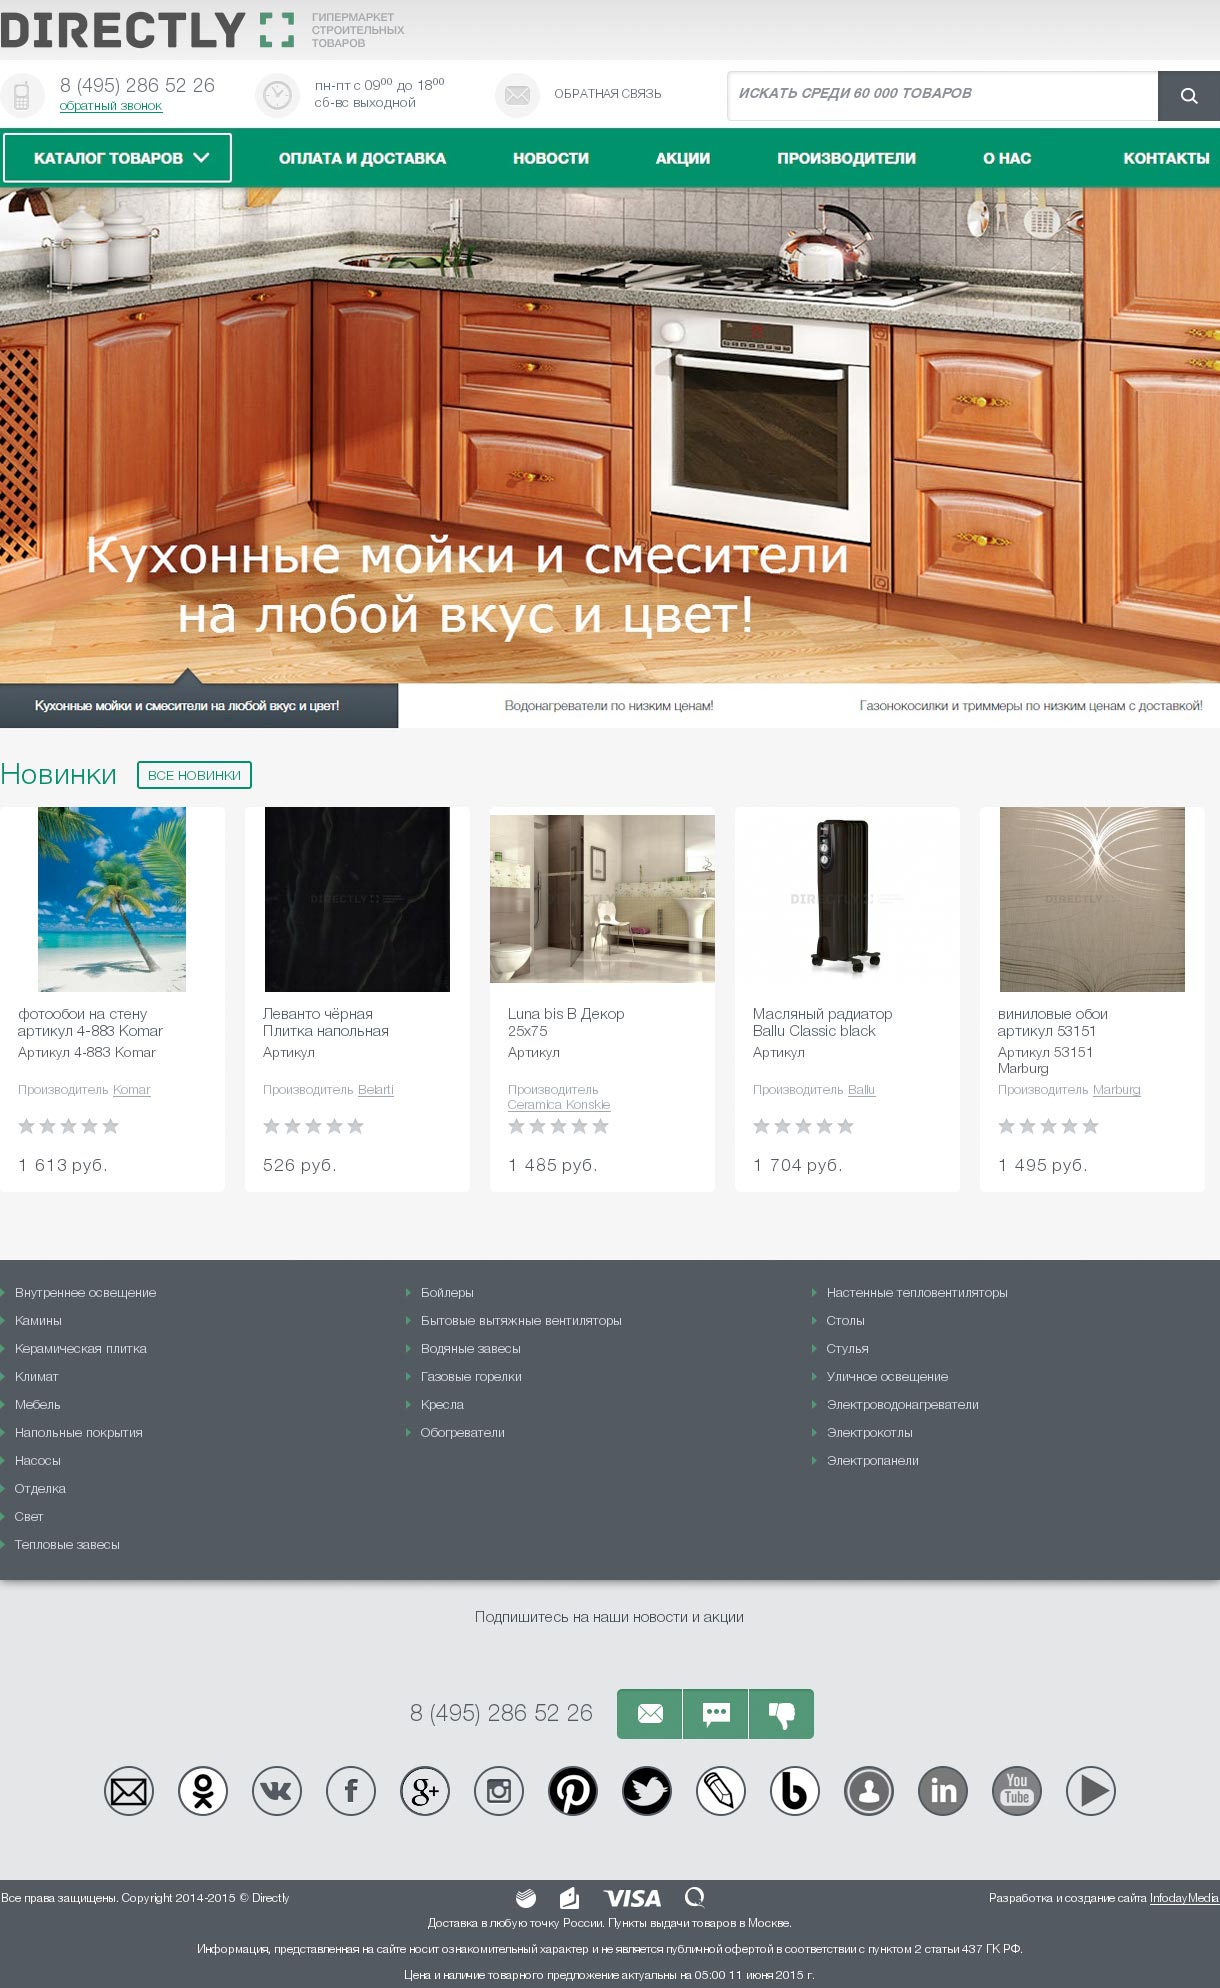 Создание каталога для сайта directly.ru Фото 1